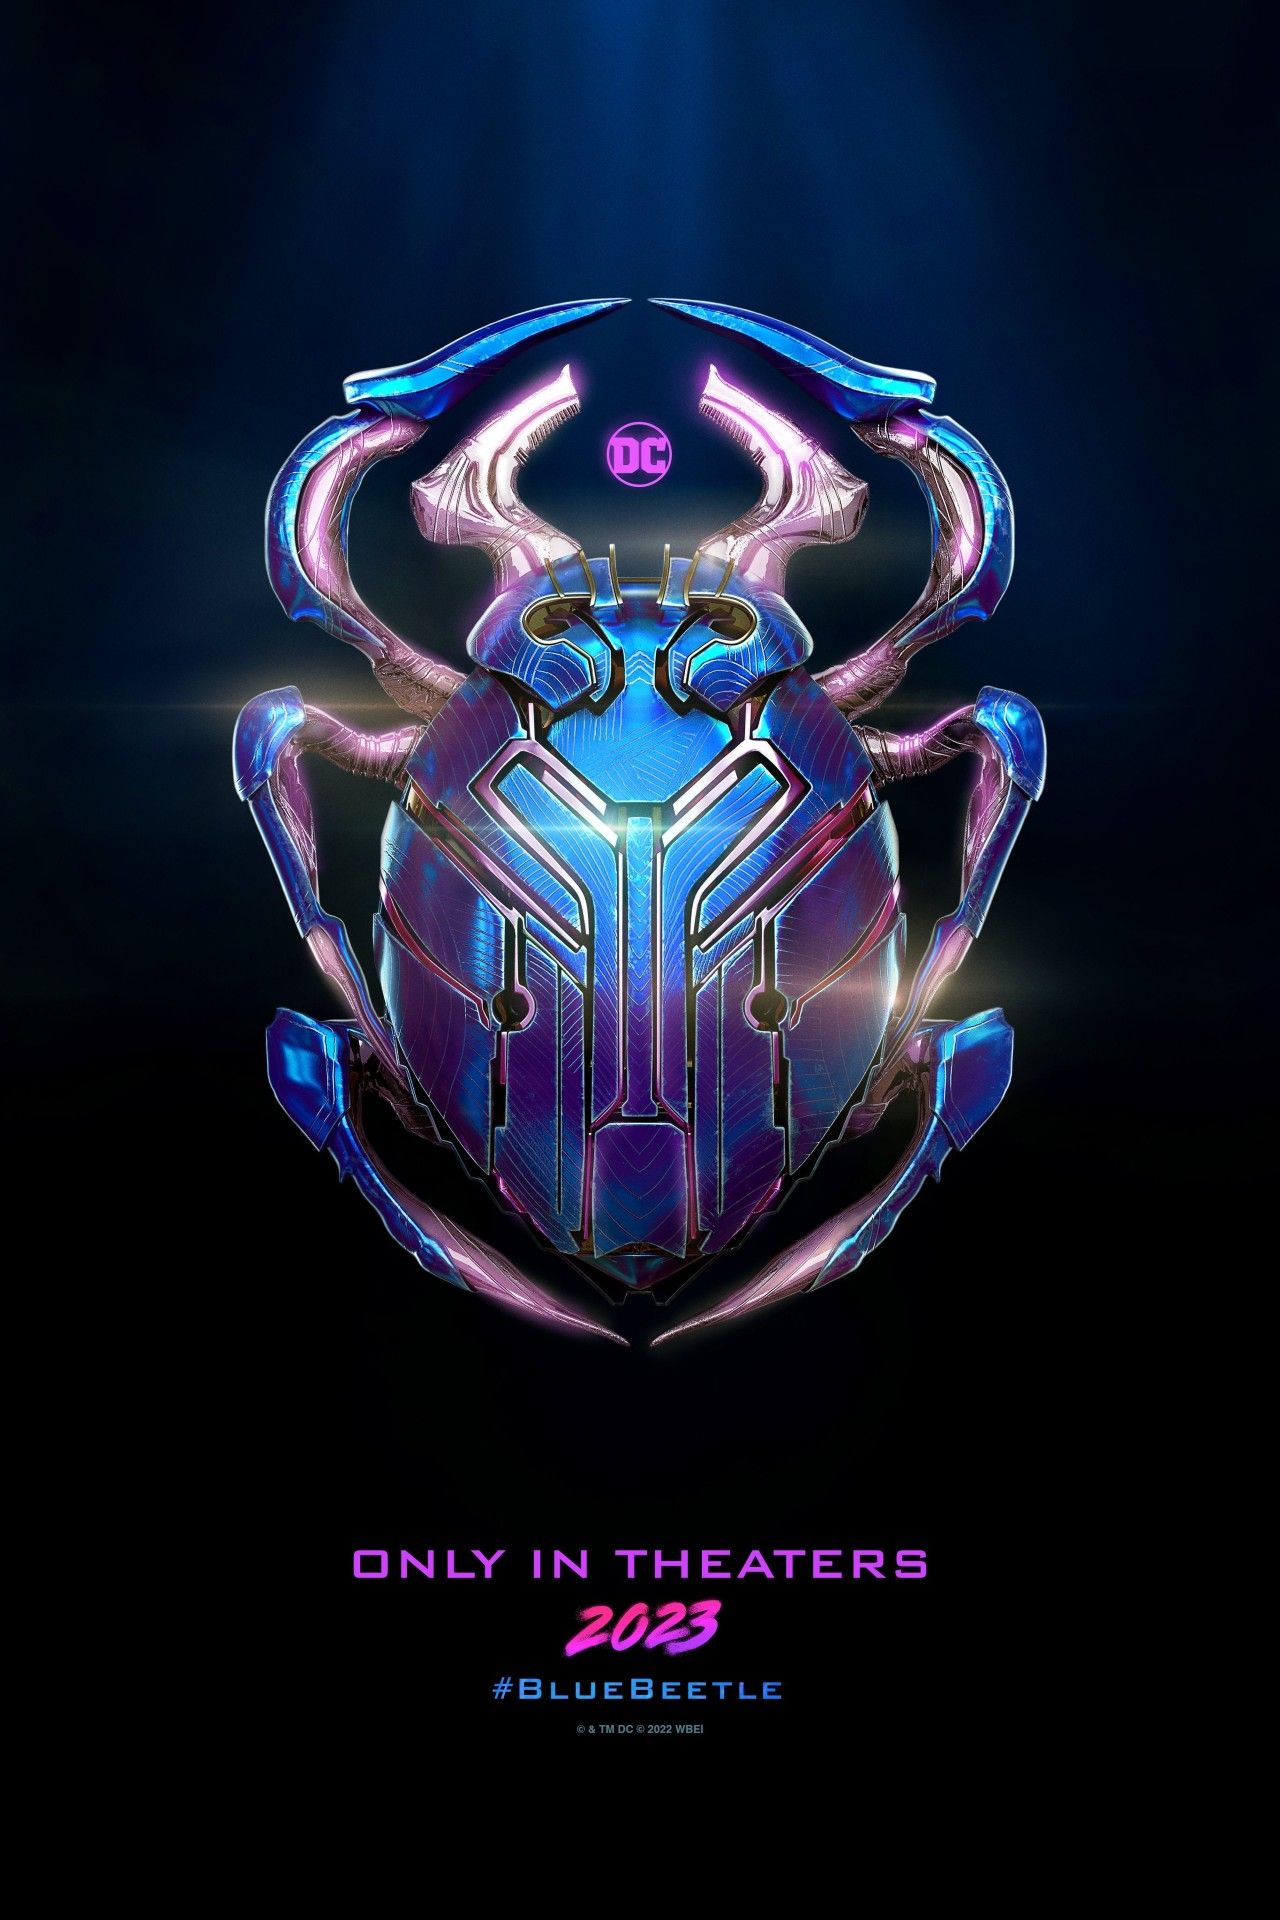 Teaser poster for the film “Blue Beetle”